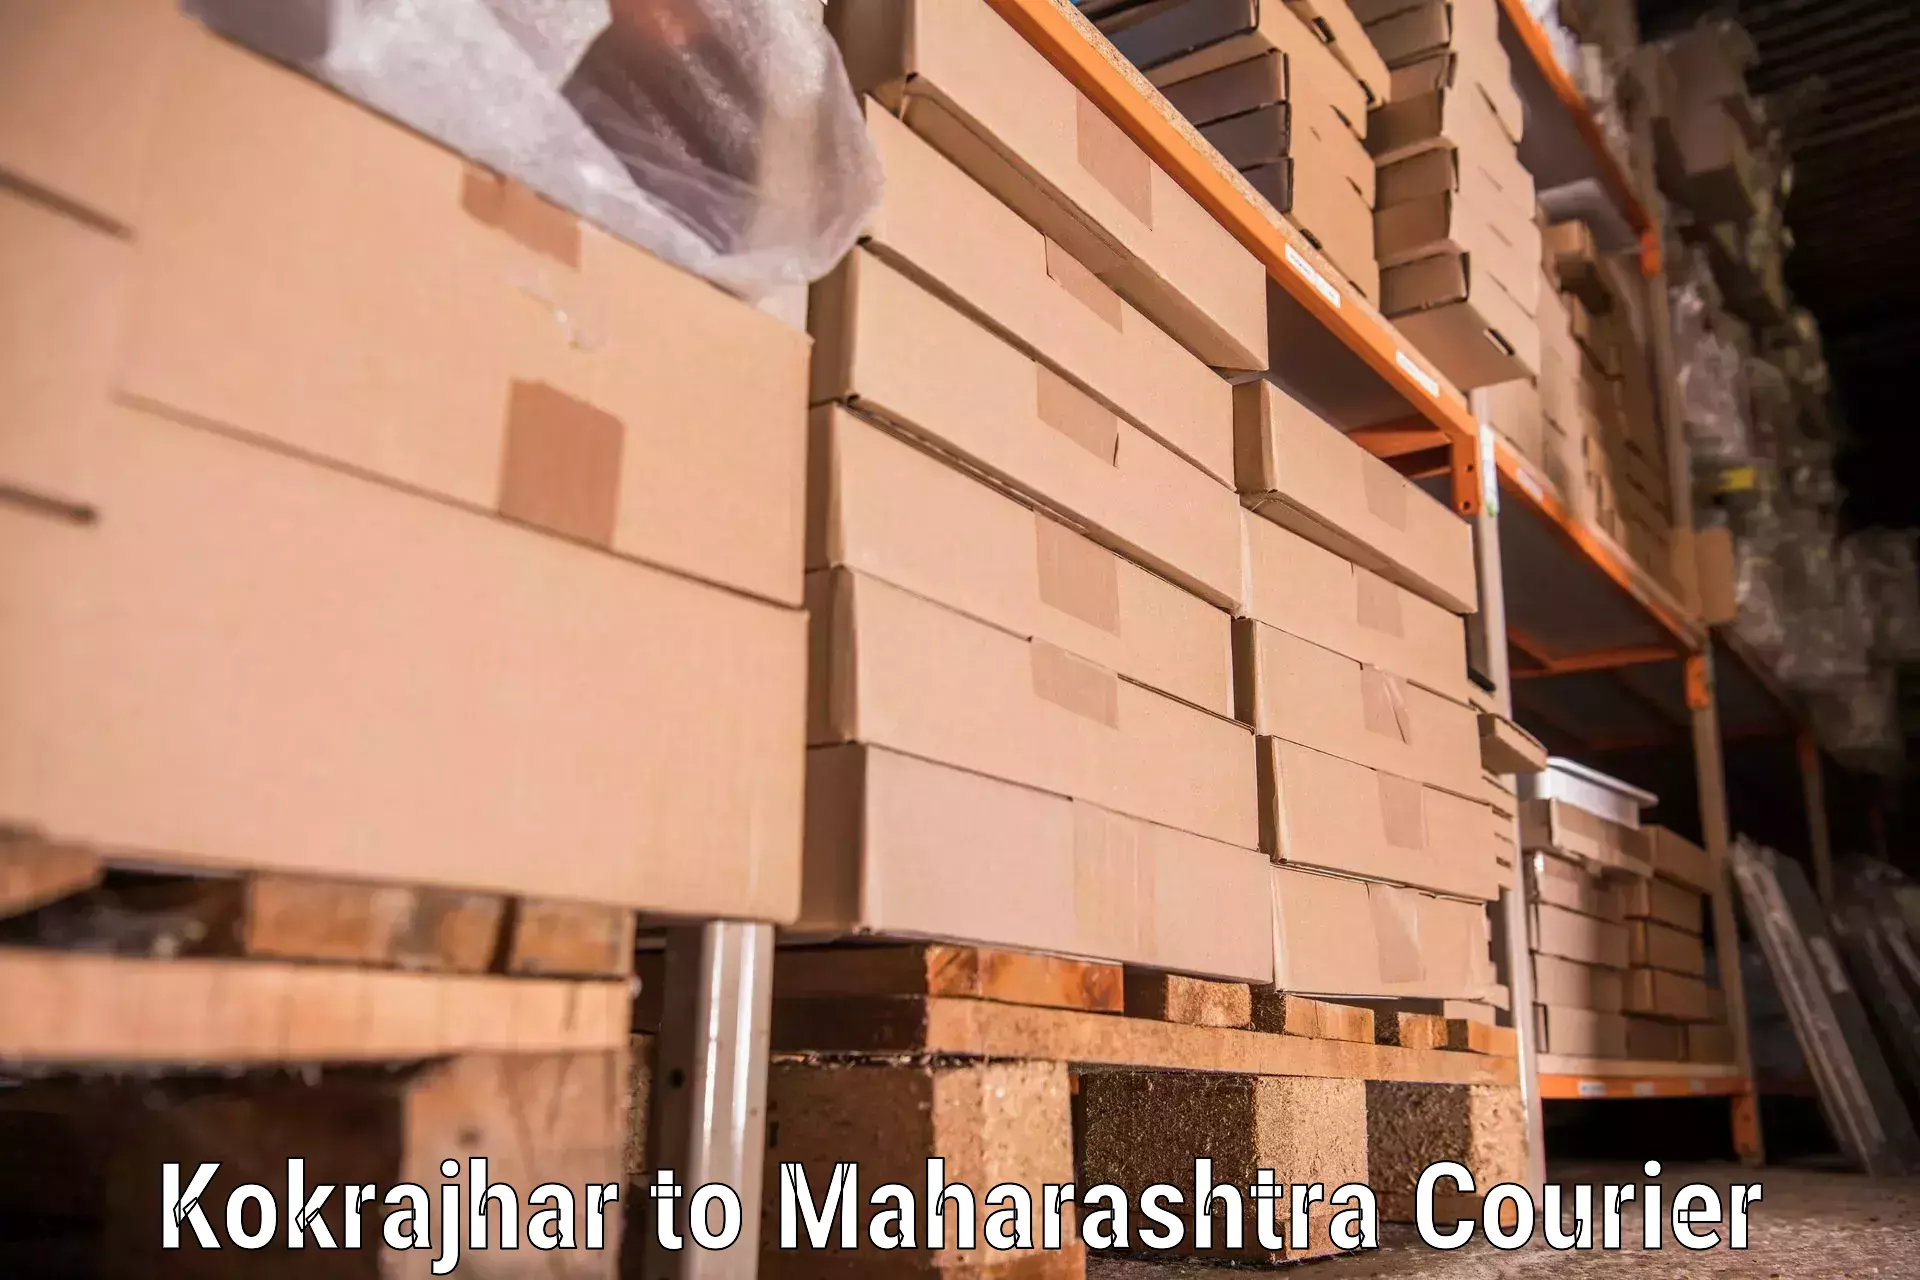 Professional moving company Kokrajhar to Igatpuri